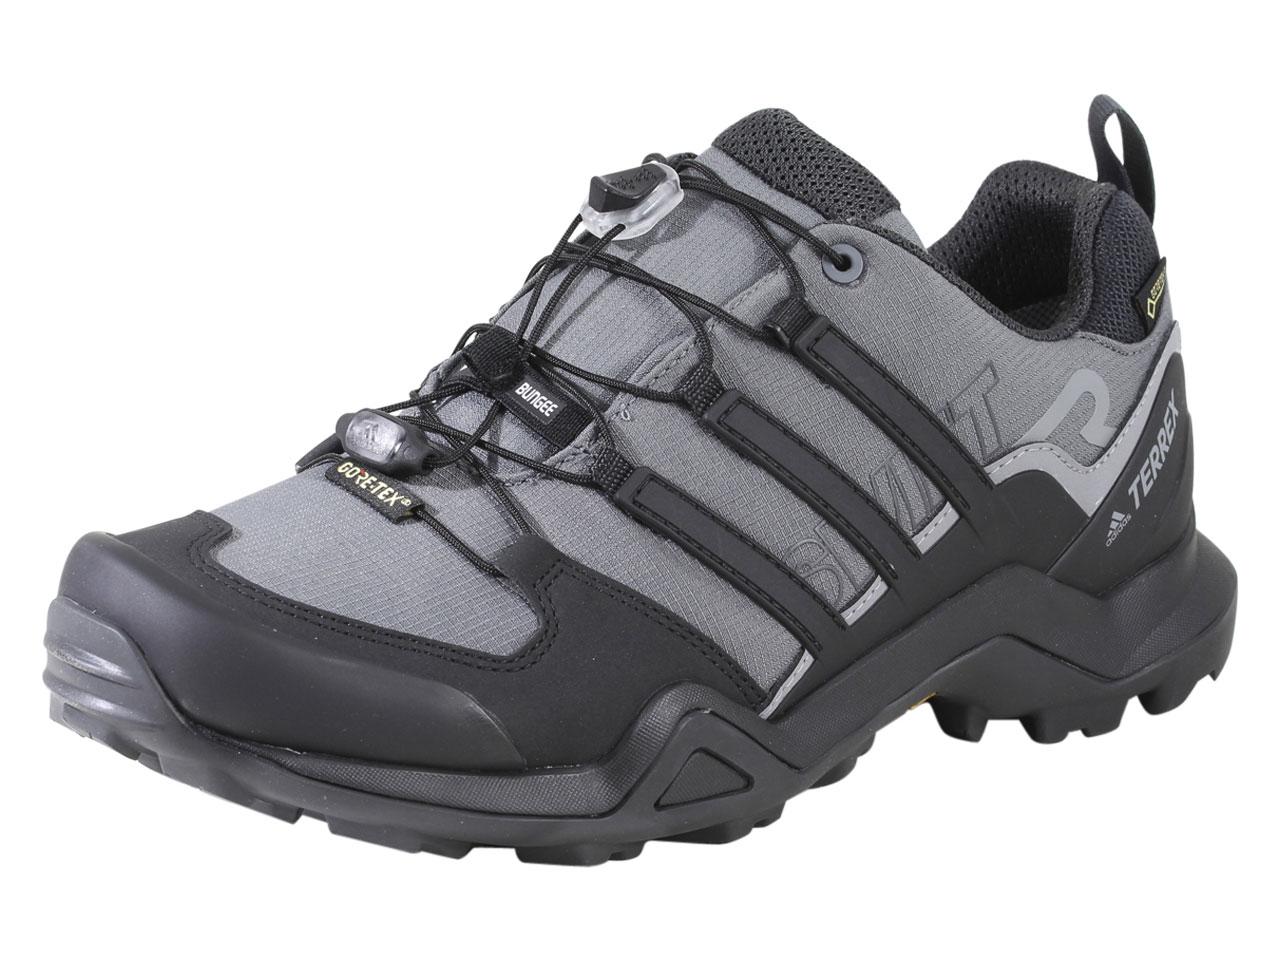 Adidas Men's Terrex Swift R2 GTX Hiking Sneakers Shoes - Grey Five/Black/Carbon - 8.5 D(M) US